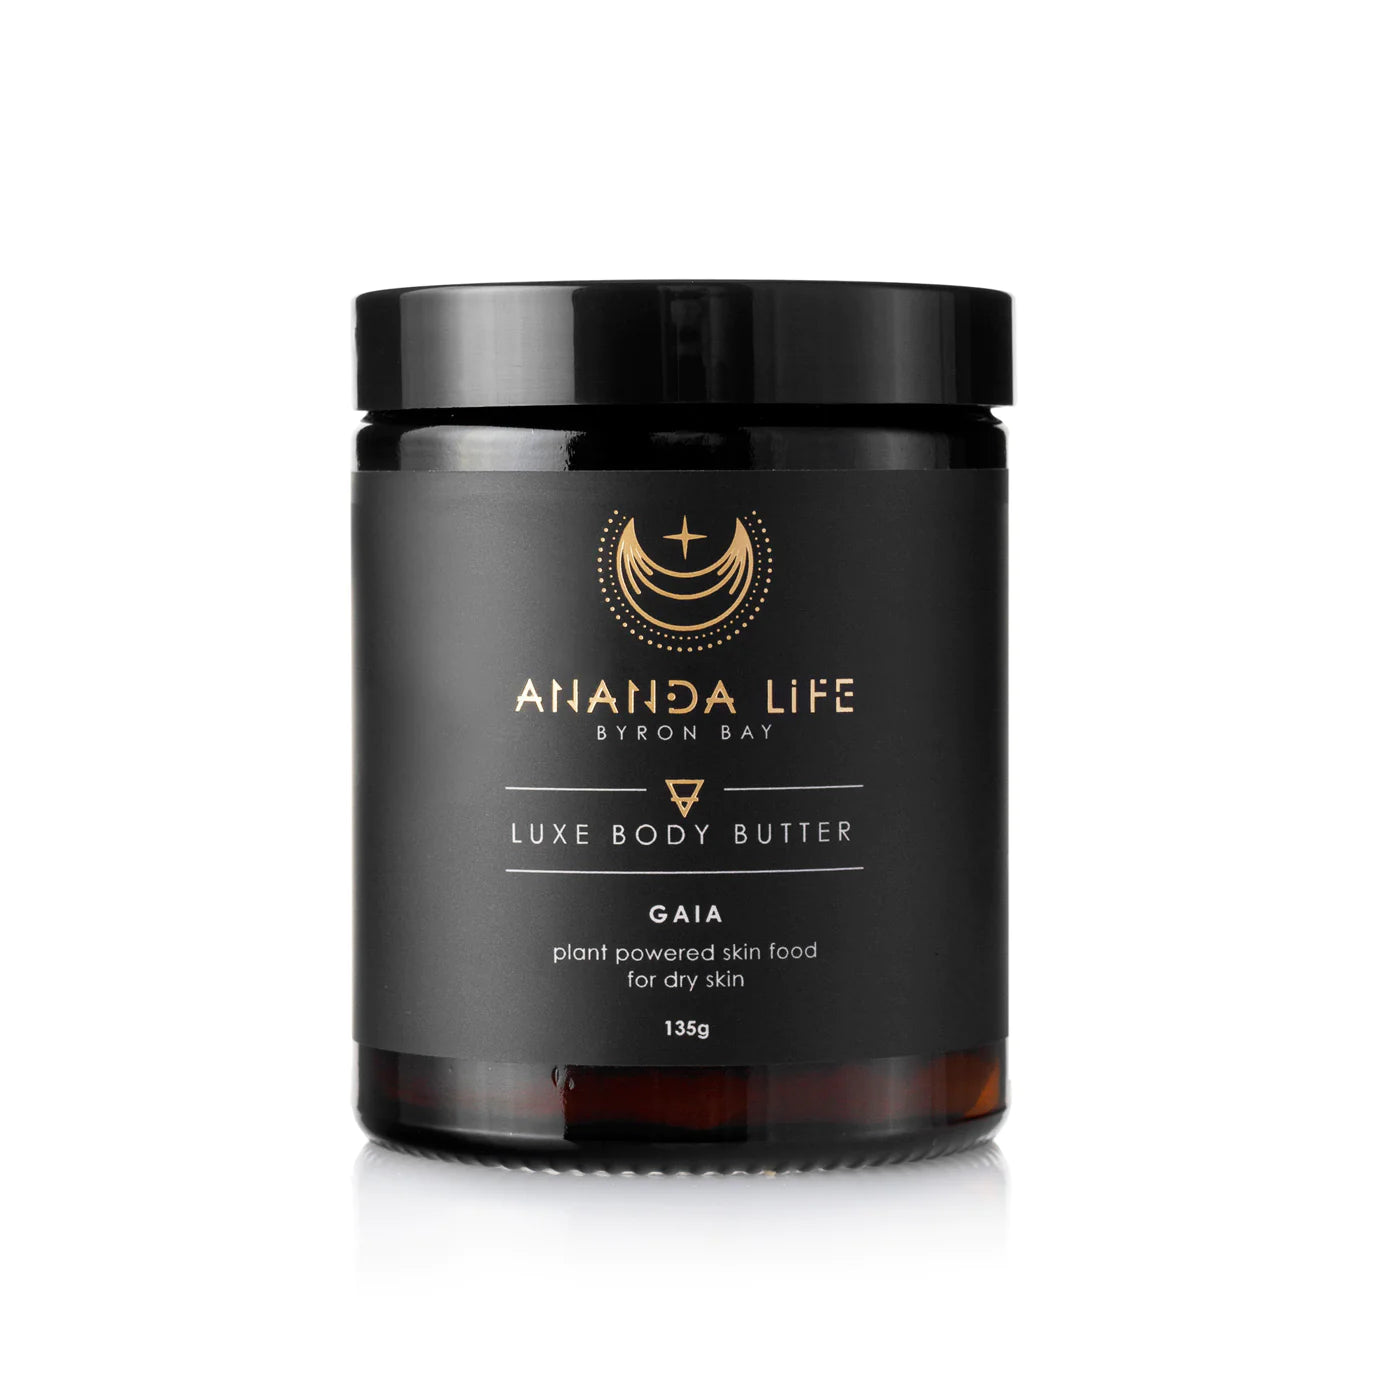 Ananda life - Luxe Body Butter Gaia